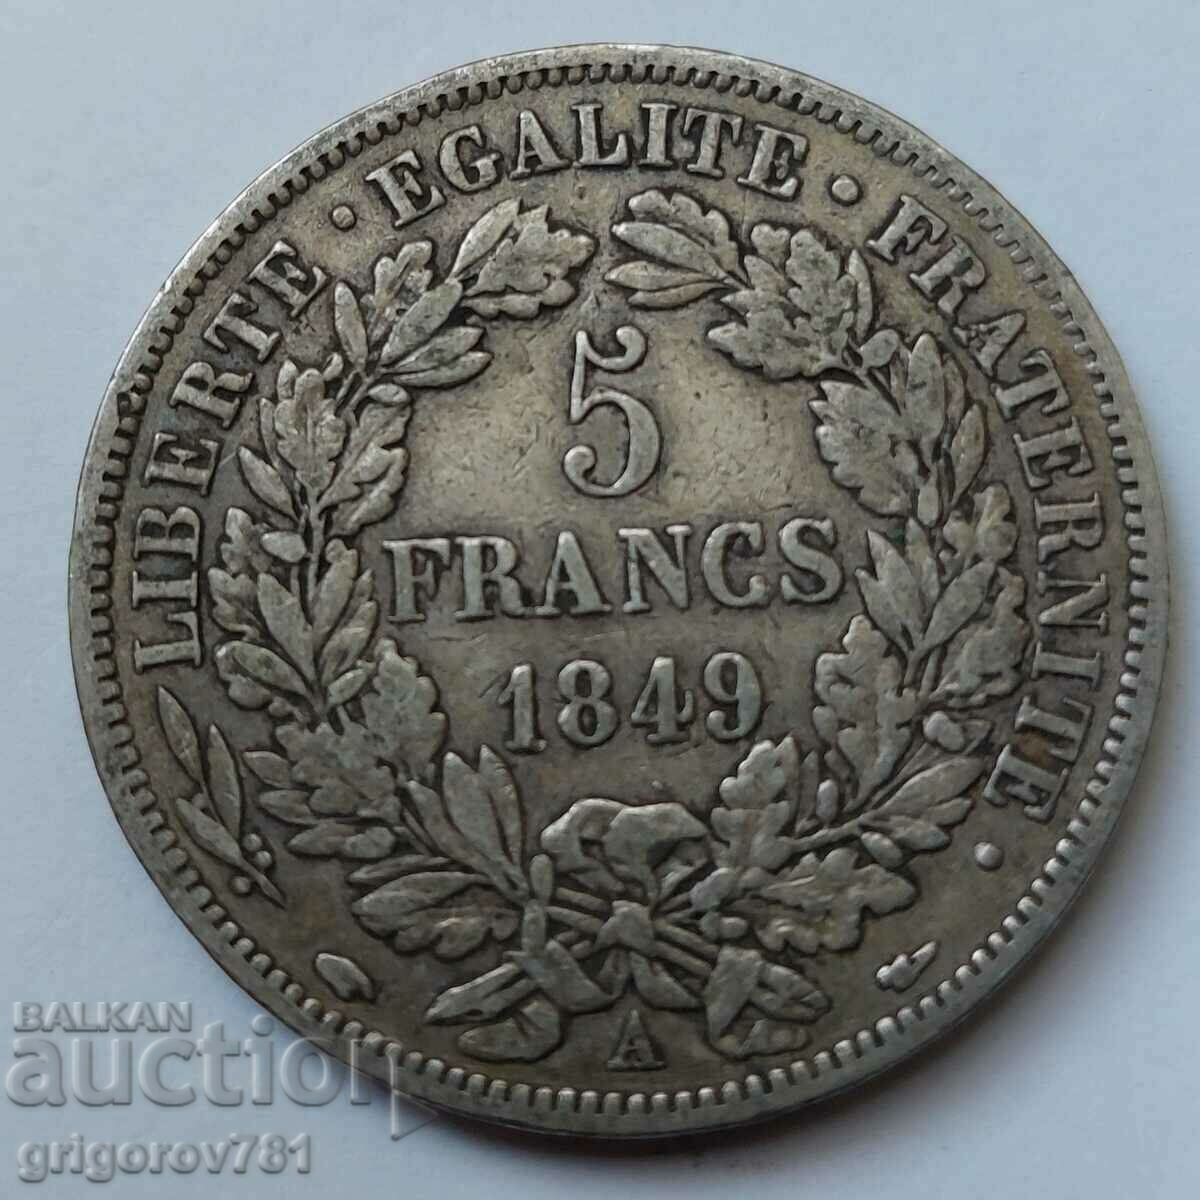 5 Francs Silver France 1849 A- Silver Coin #214